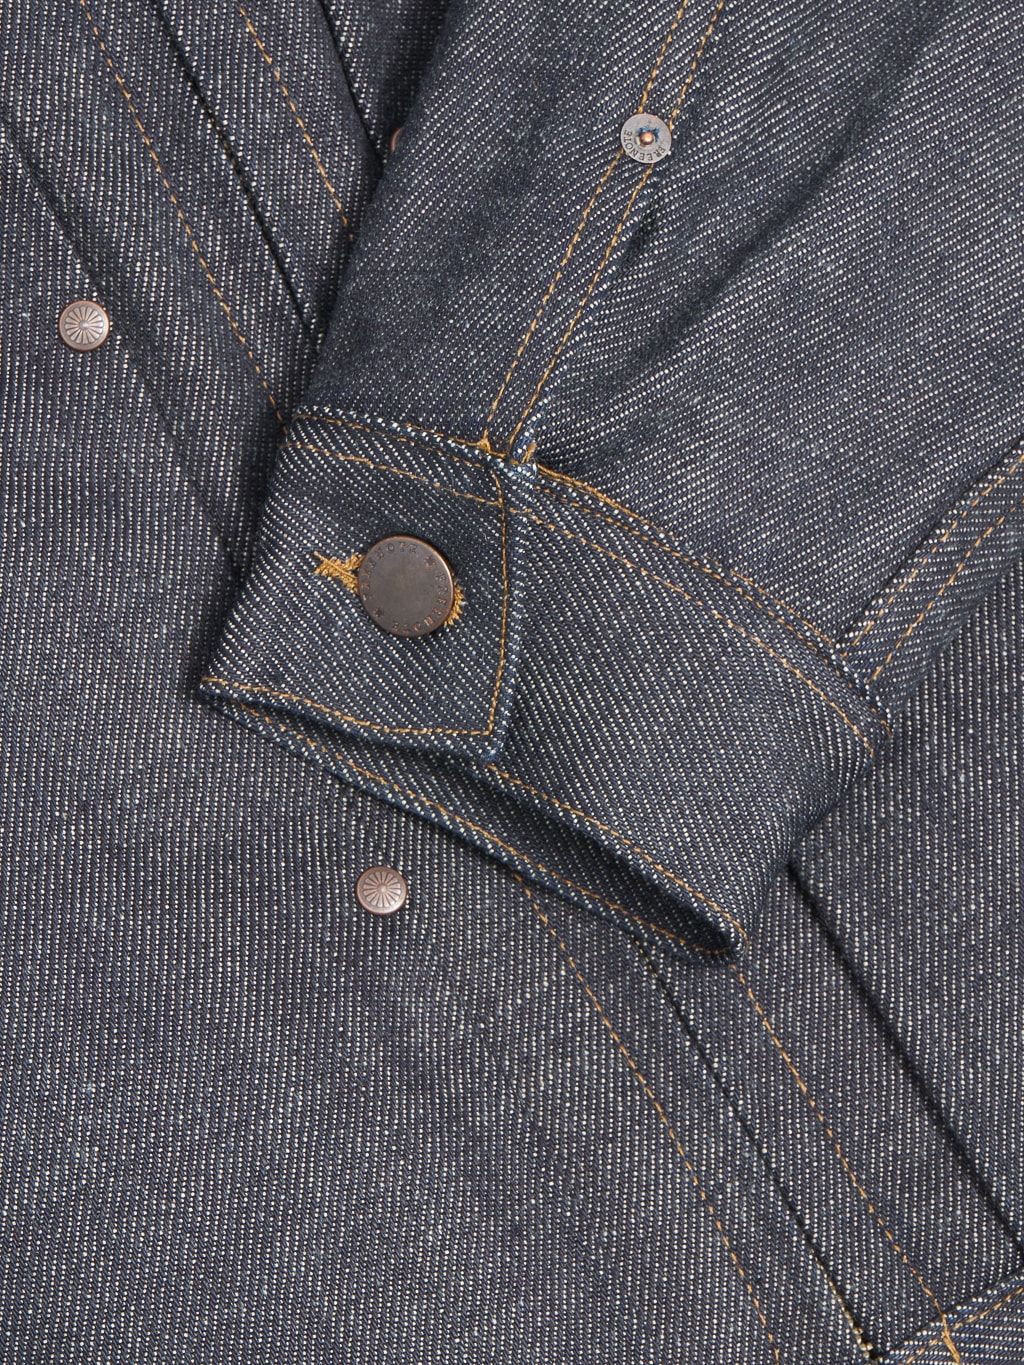 Freenote cloth denim shearling jacket cuff original details